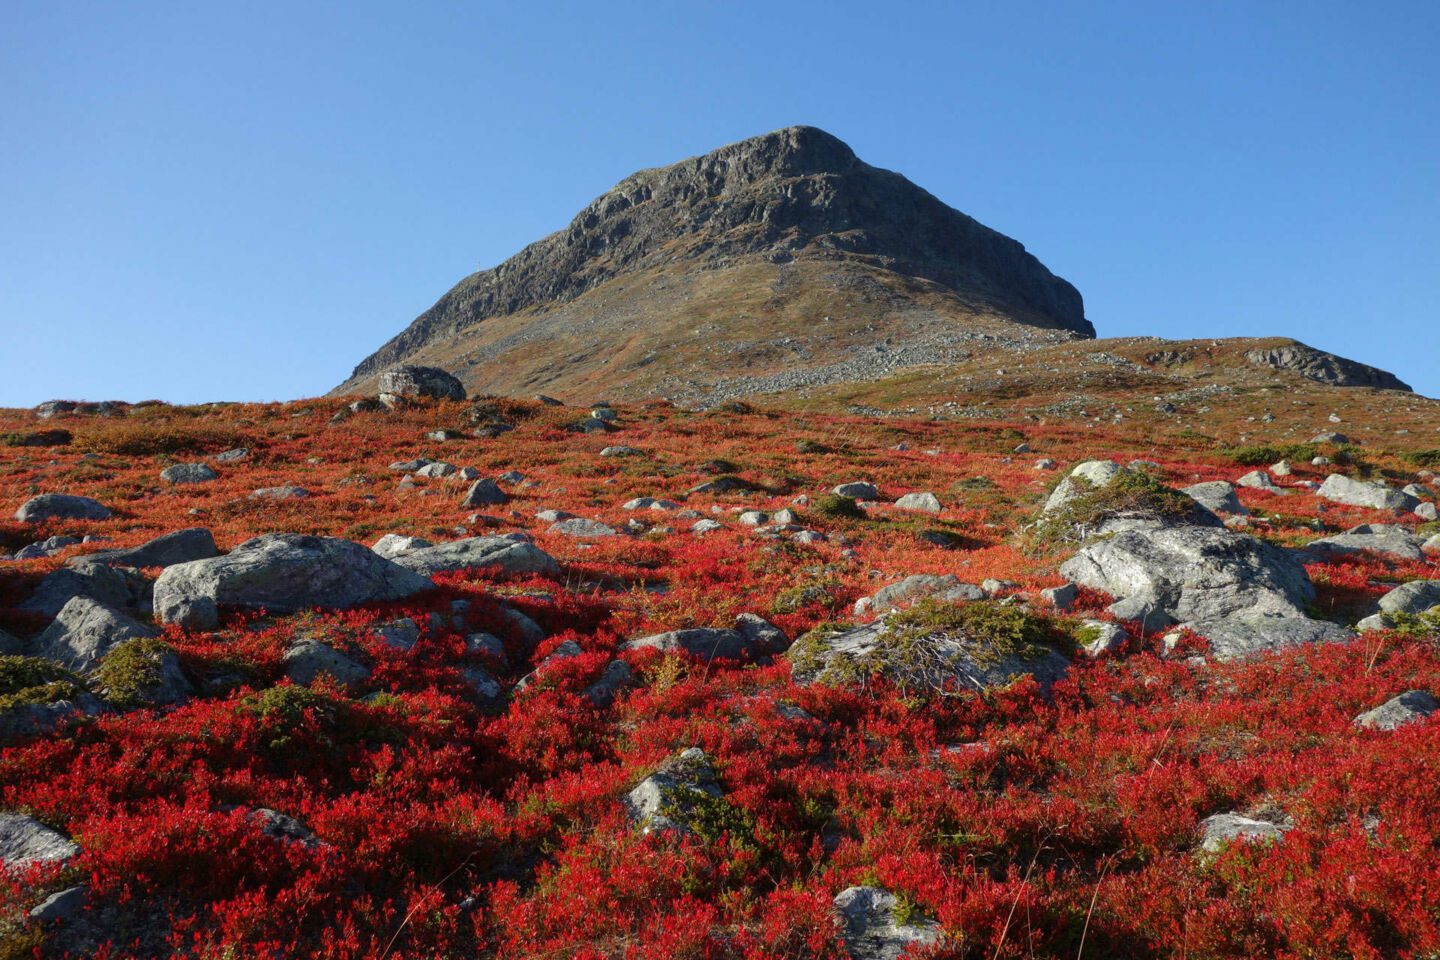 Autumn colors at Mt. Saana, an Arctic fell in Kilpisjärvi, a Finnish Lapland filming location